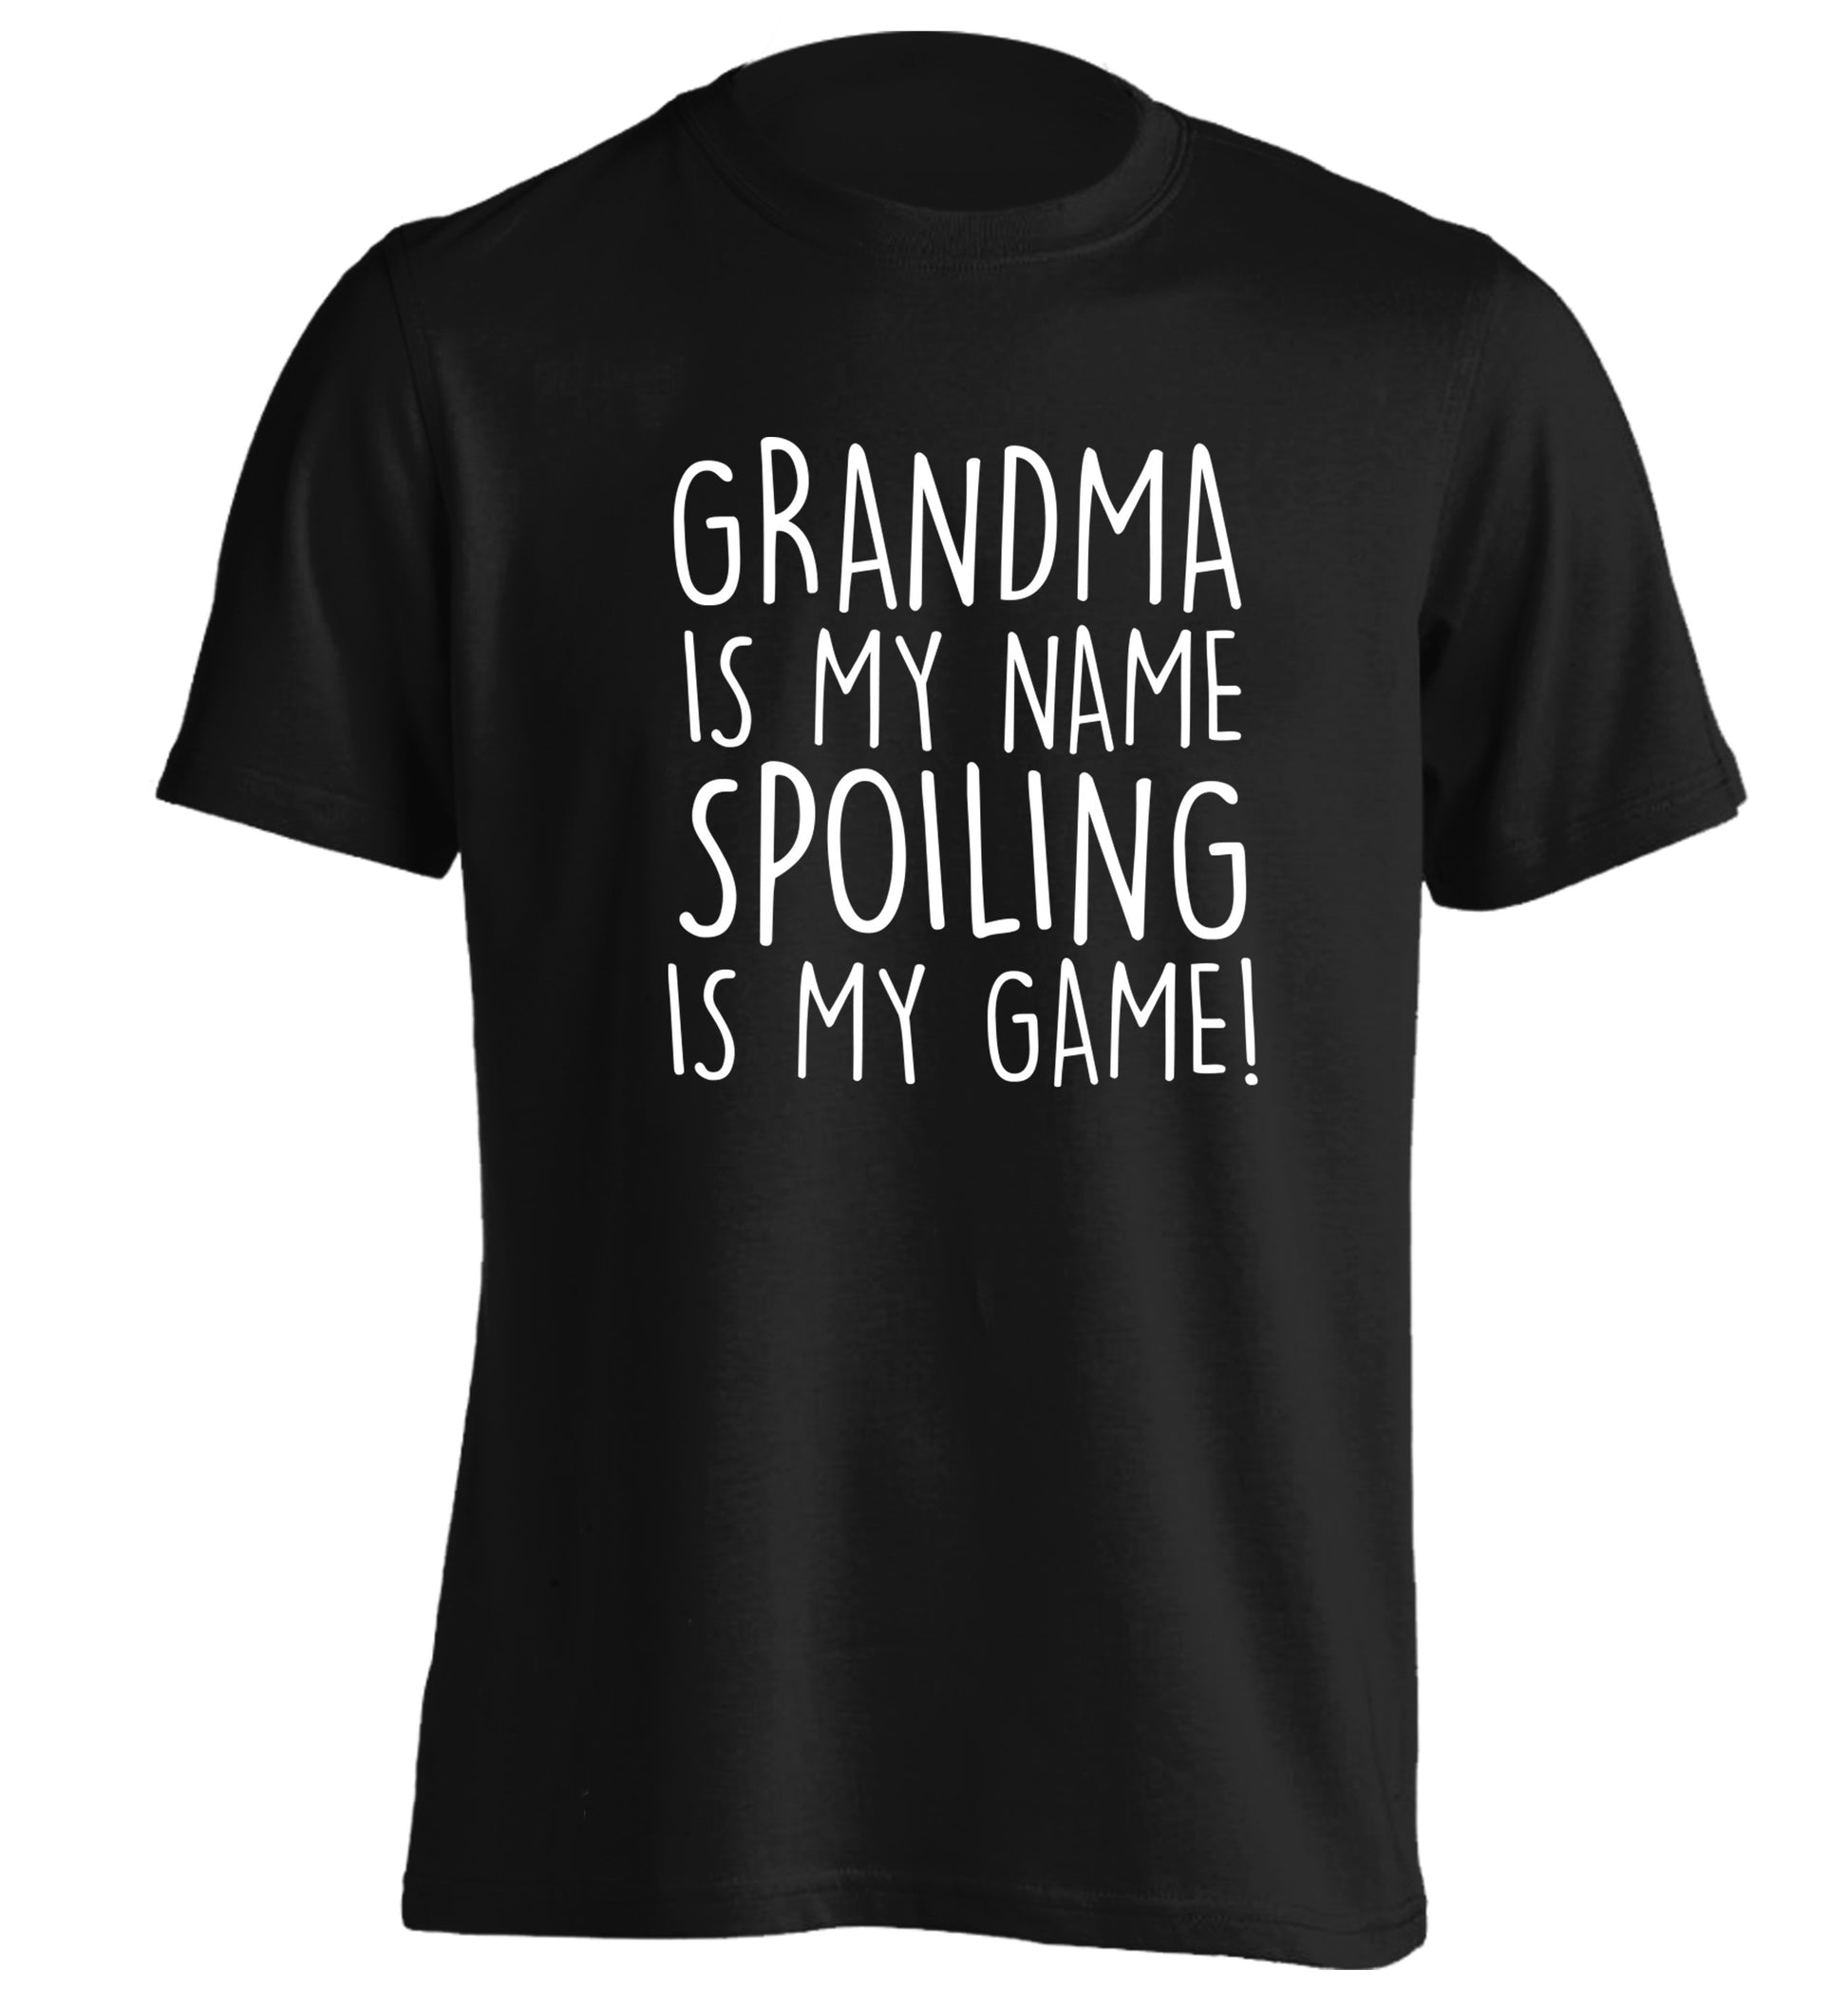 Grandma is my name, spoiling is my game adults unisex black Tshirt 2XL